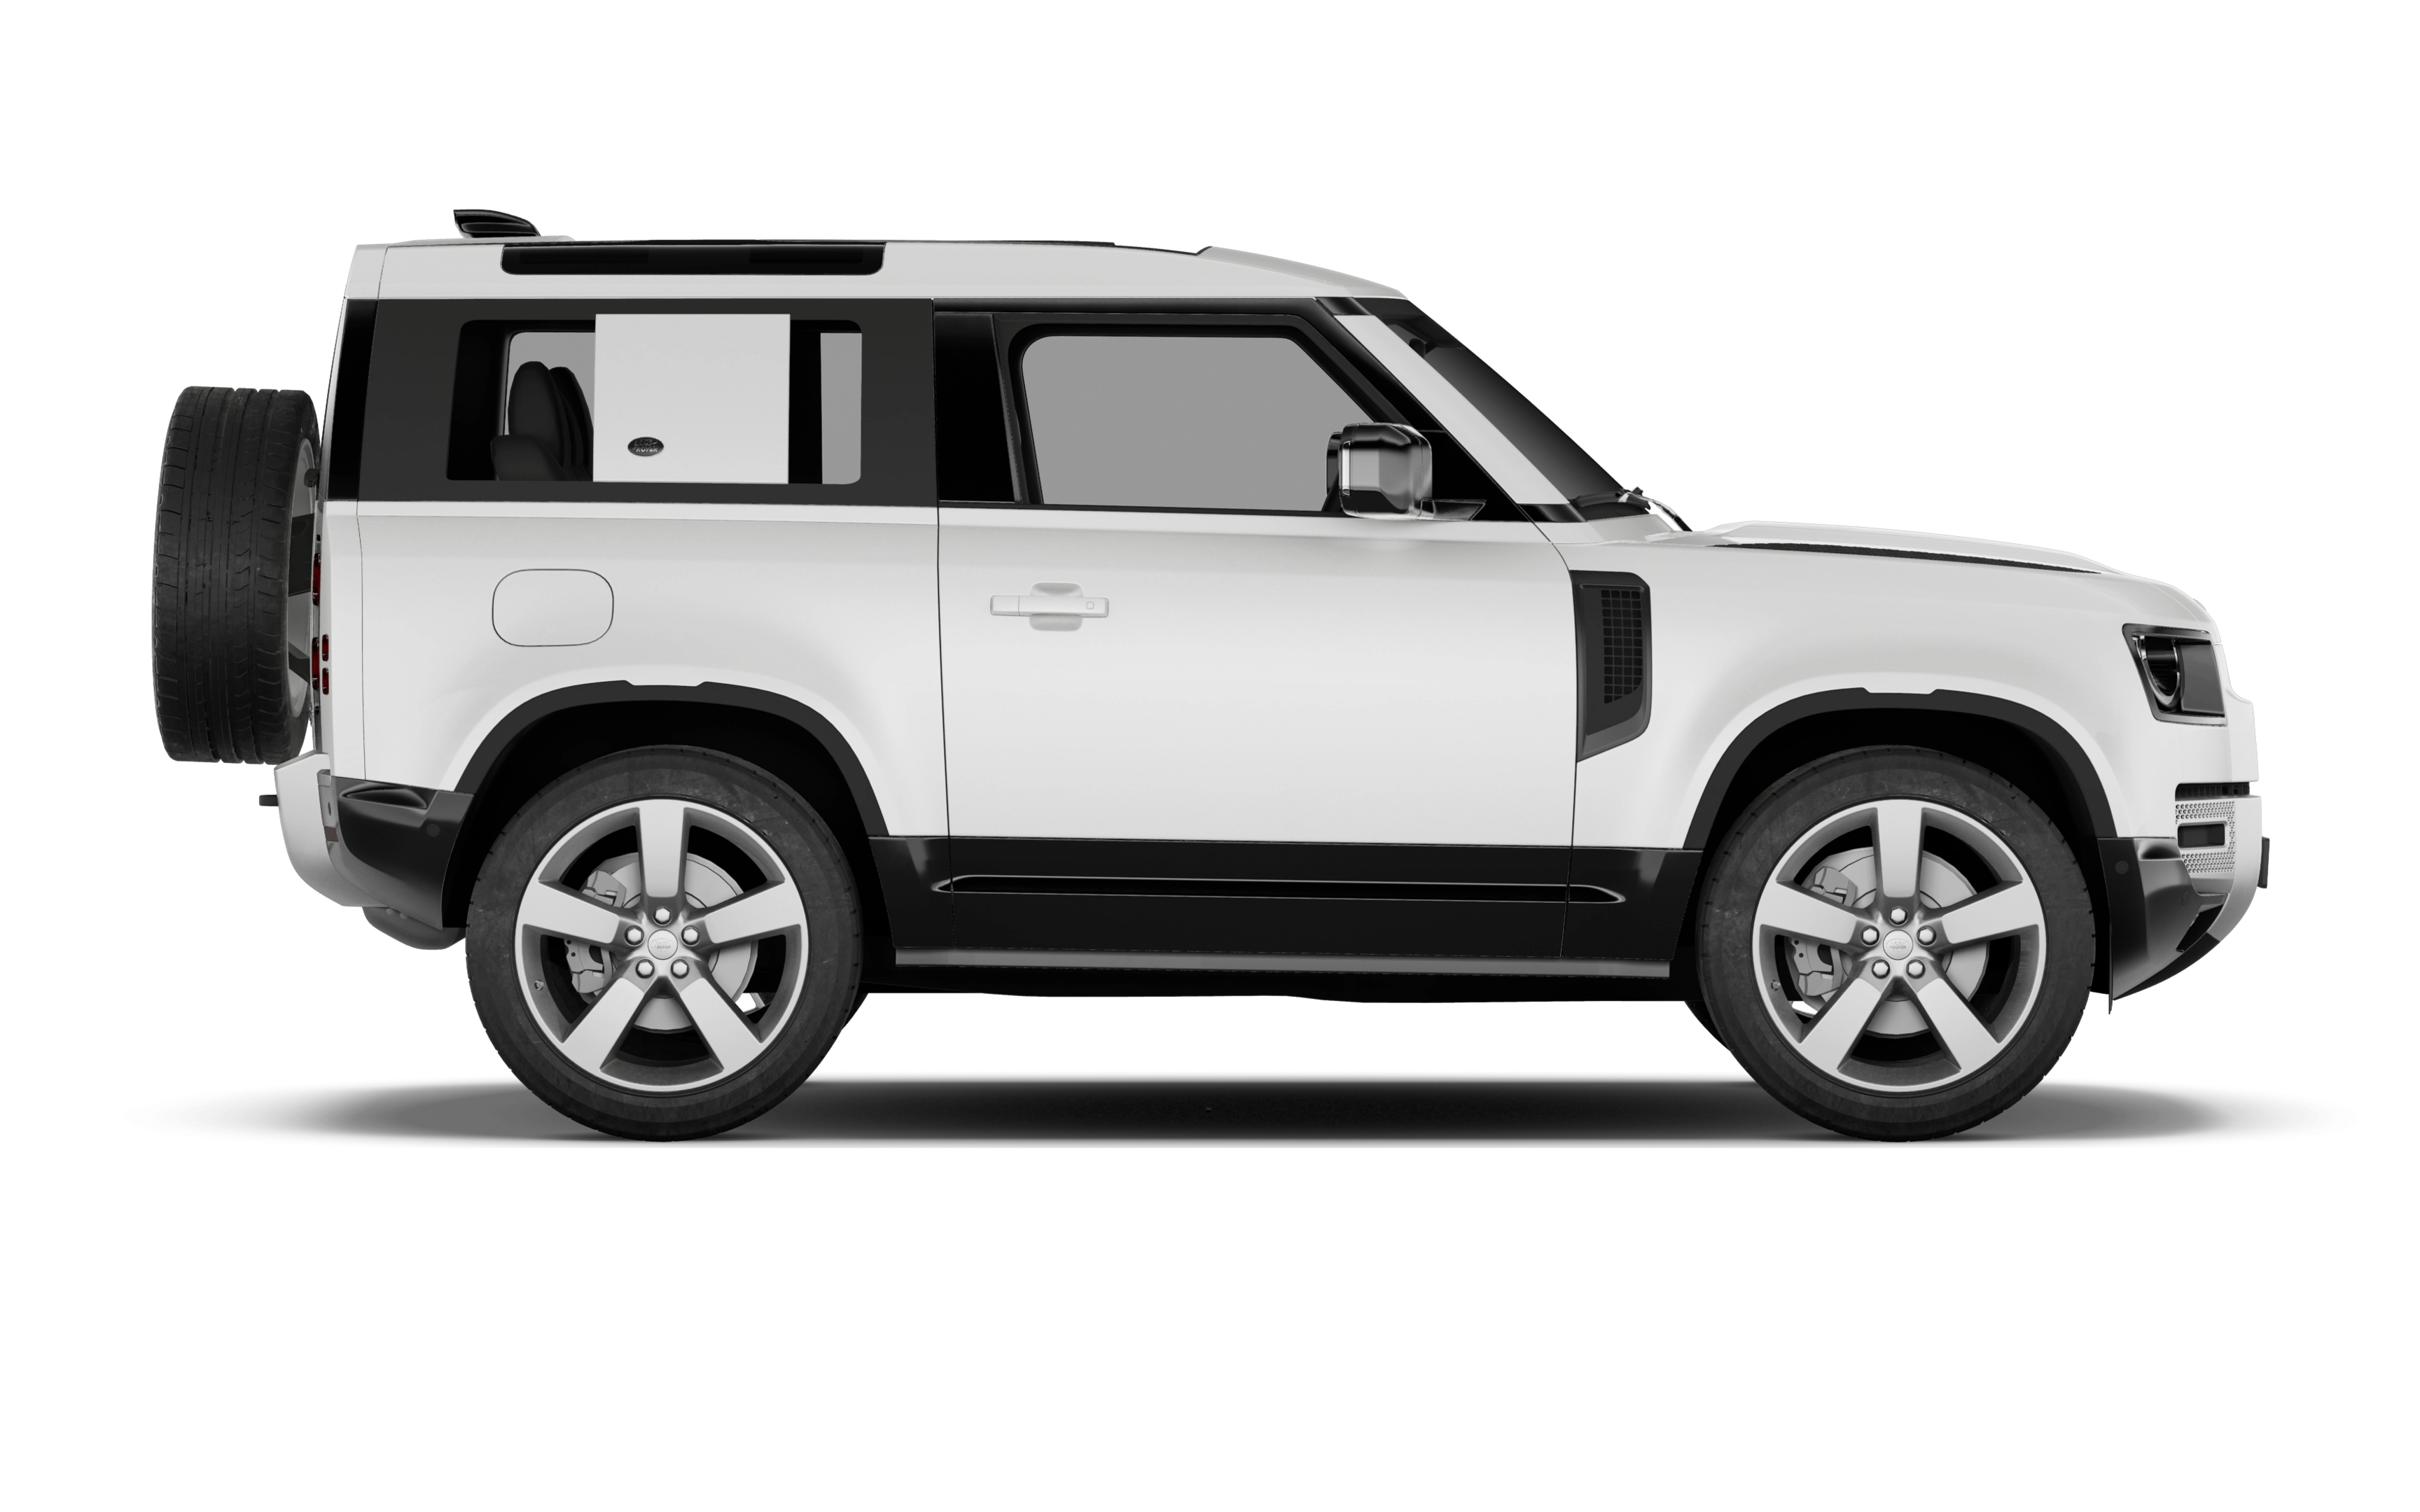 Land rover defender estate 3.0 d300 x-dynamic hse 110 5 doors auto [6 seat]